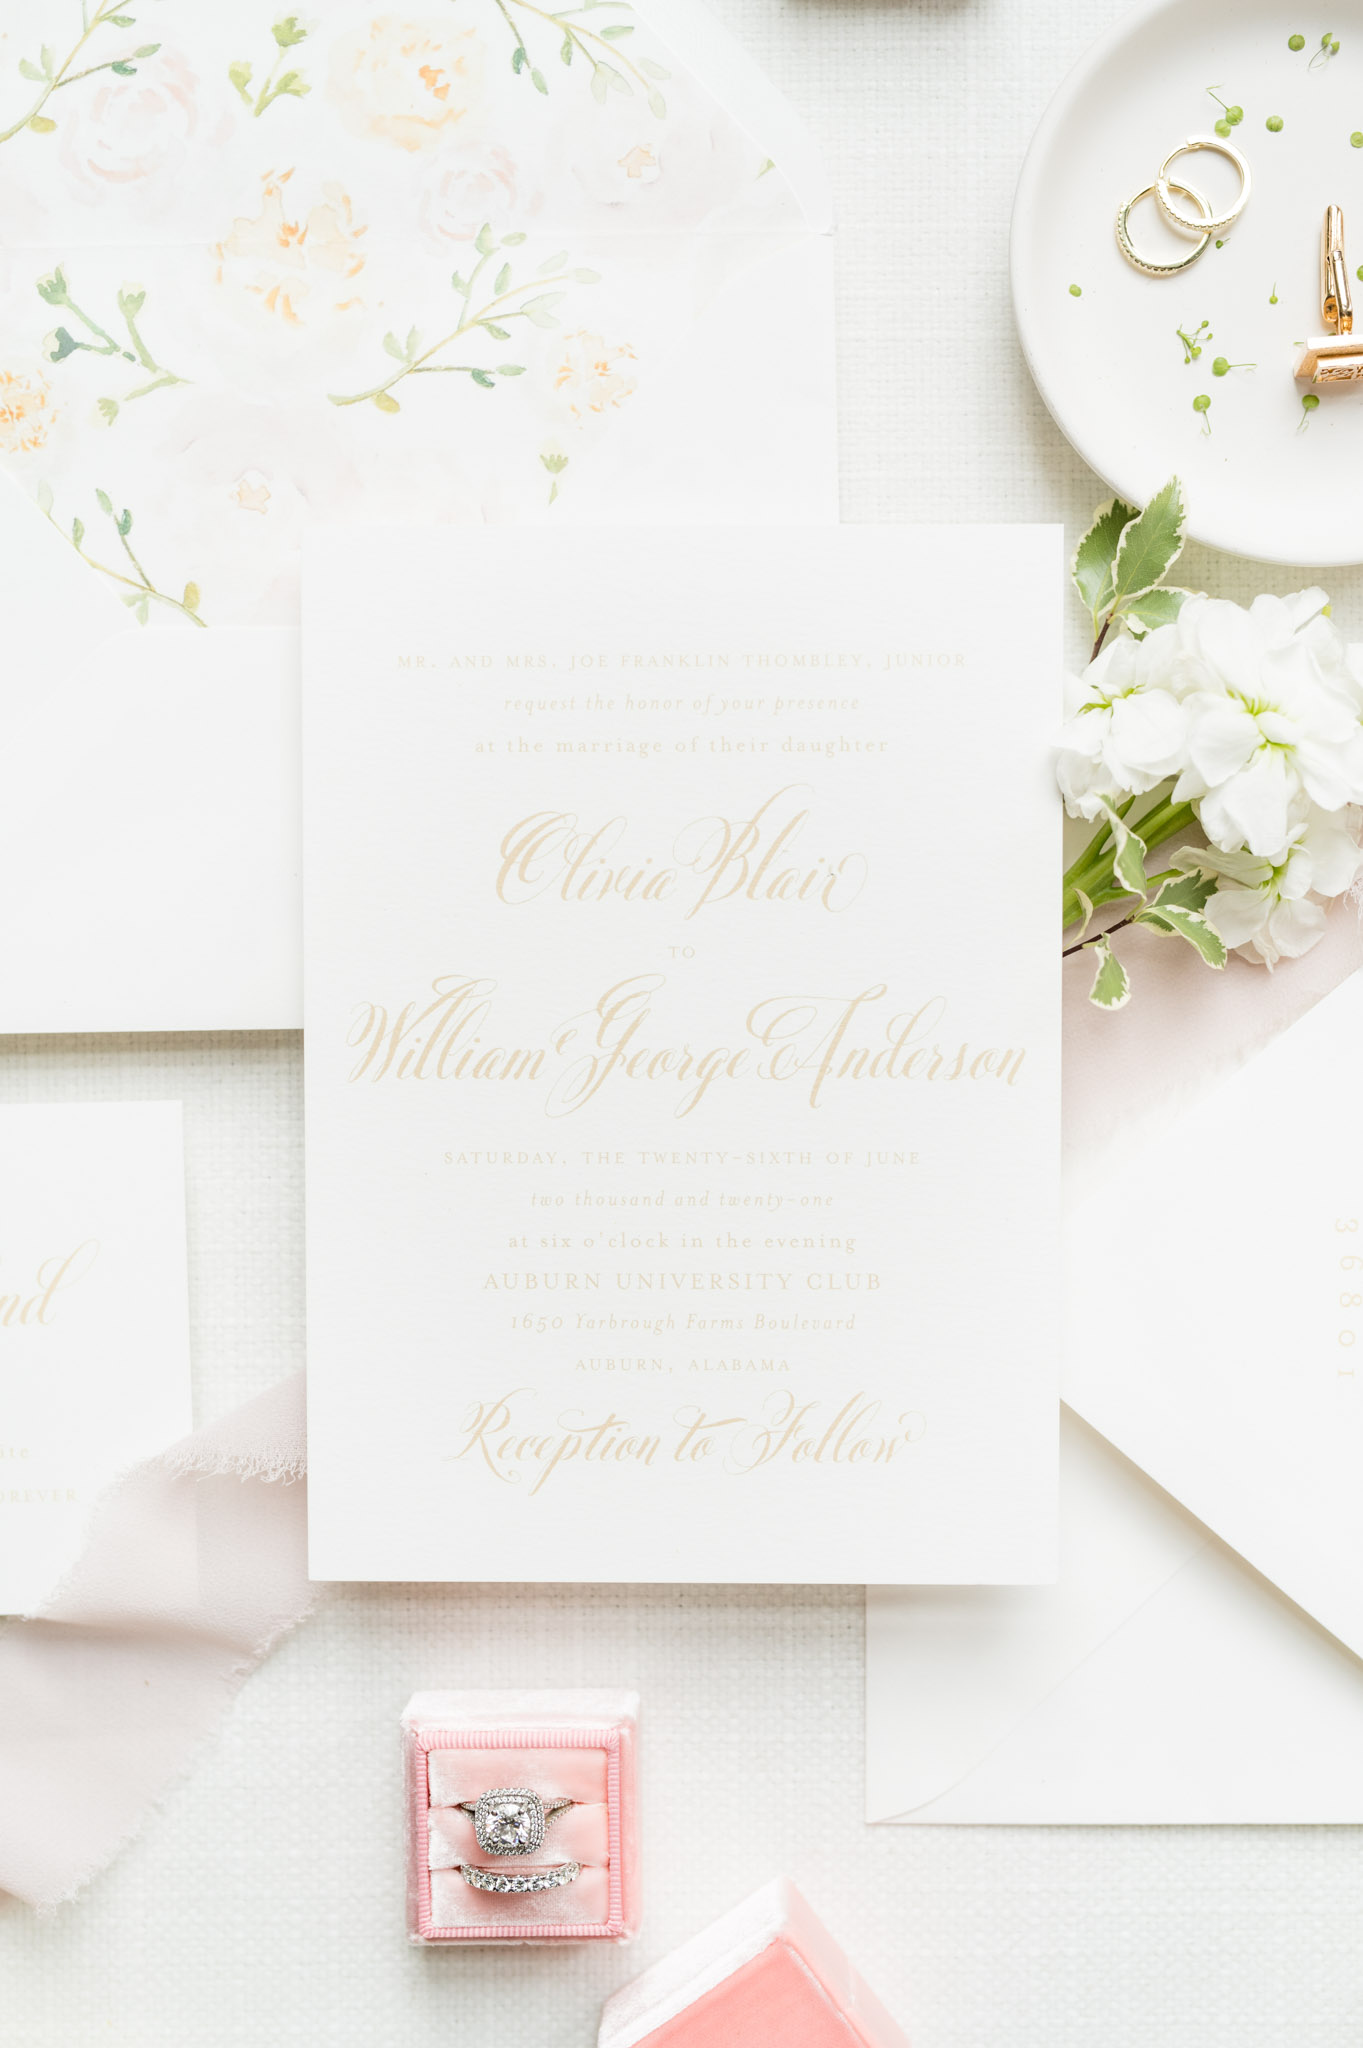 Wedding invitation details.